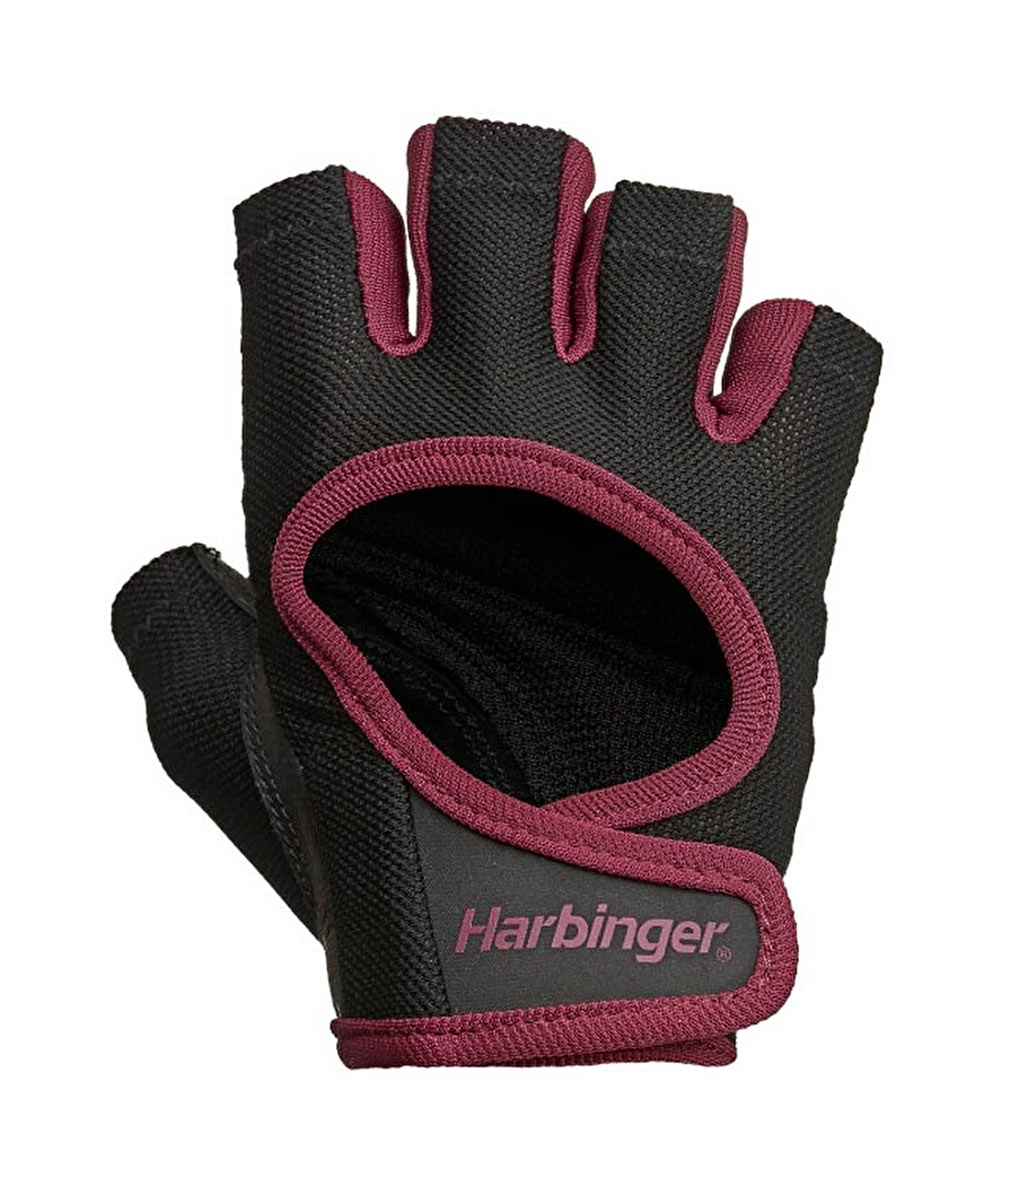 Harbinger Wmns Power Gloves Kadın Eldiven Siyah Bordo